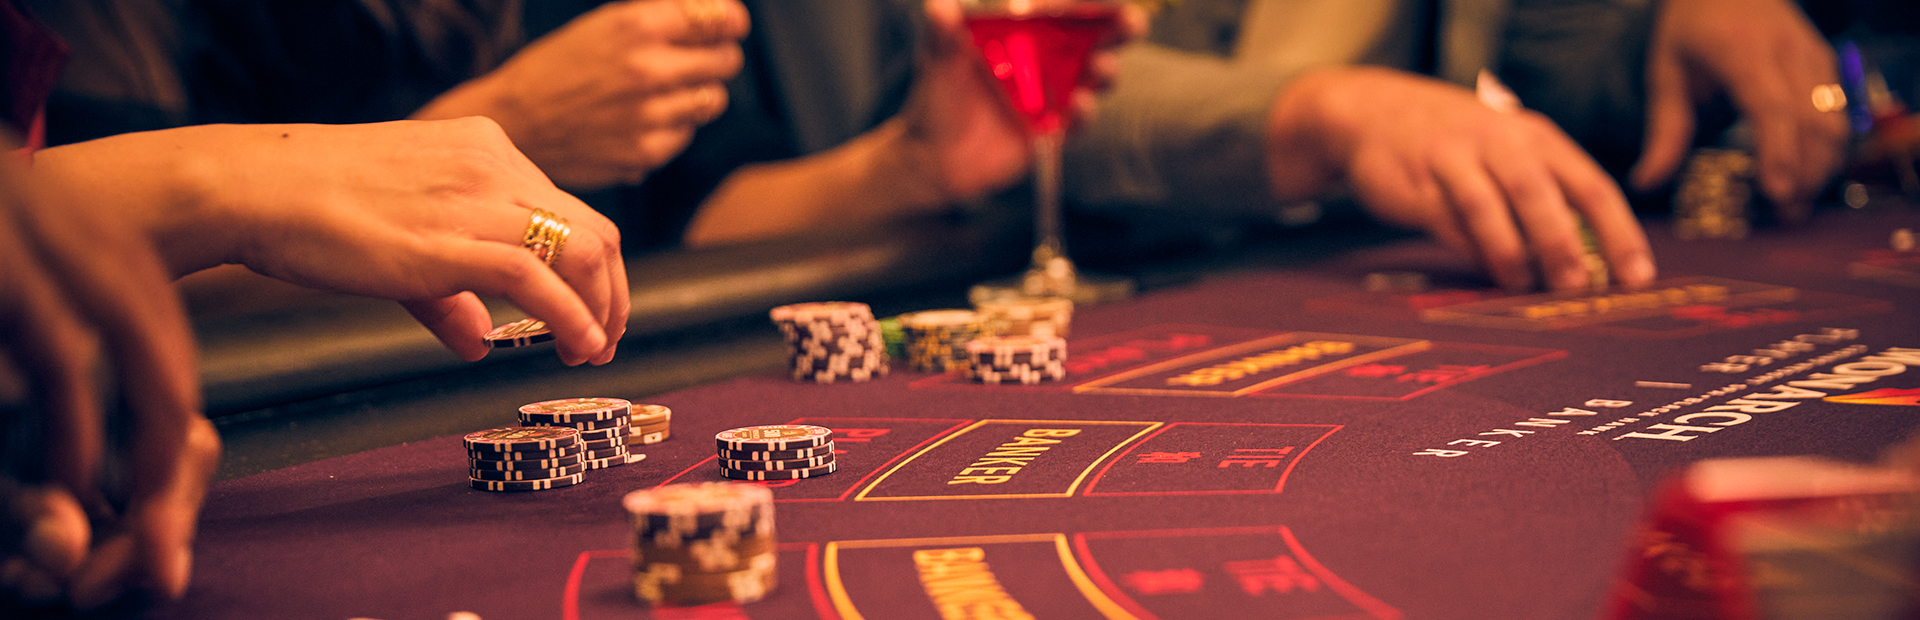 Monarch Casino Resort Spa - Table Games - Winning Hand